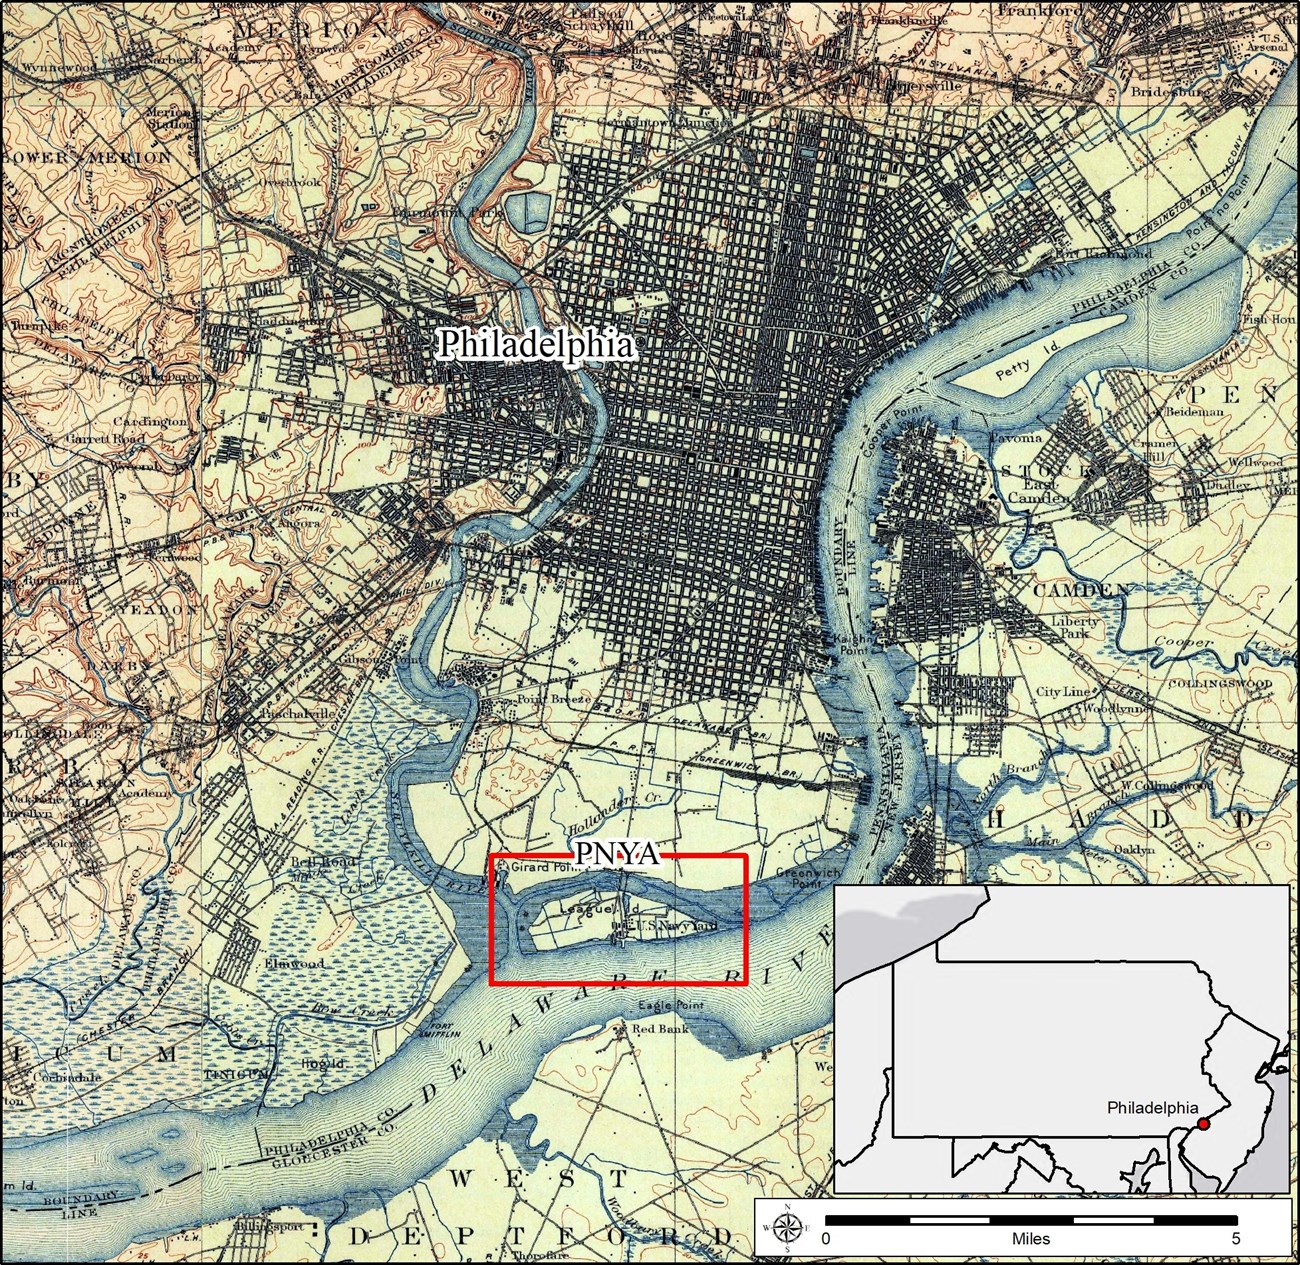 Philadelphia_1898_Reprinted1912_USGS 15 min quad_Map 1